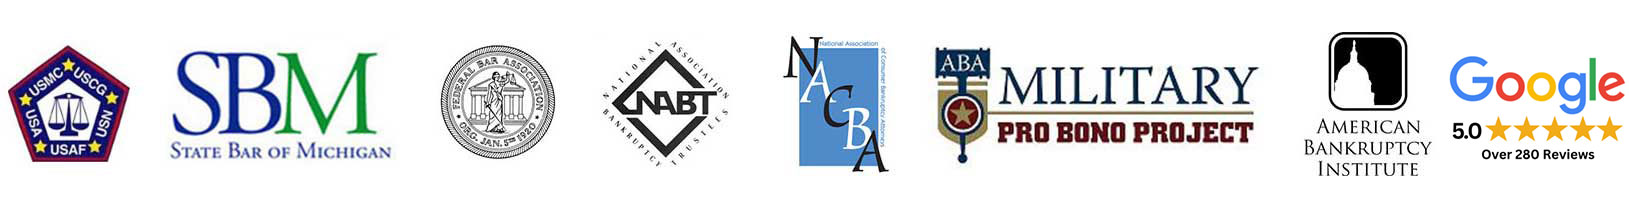 Bar Associations Logos